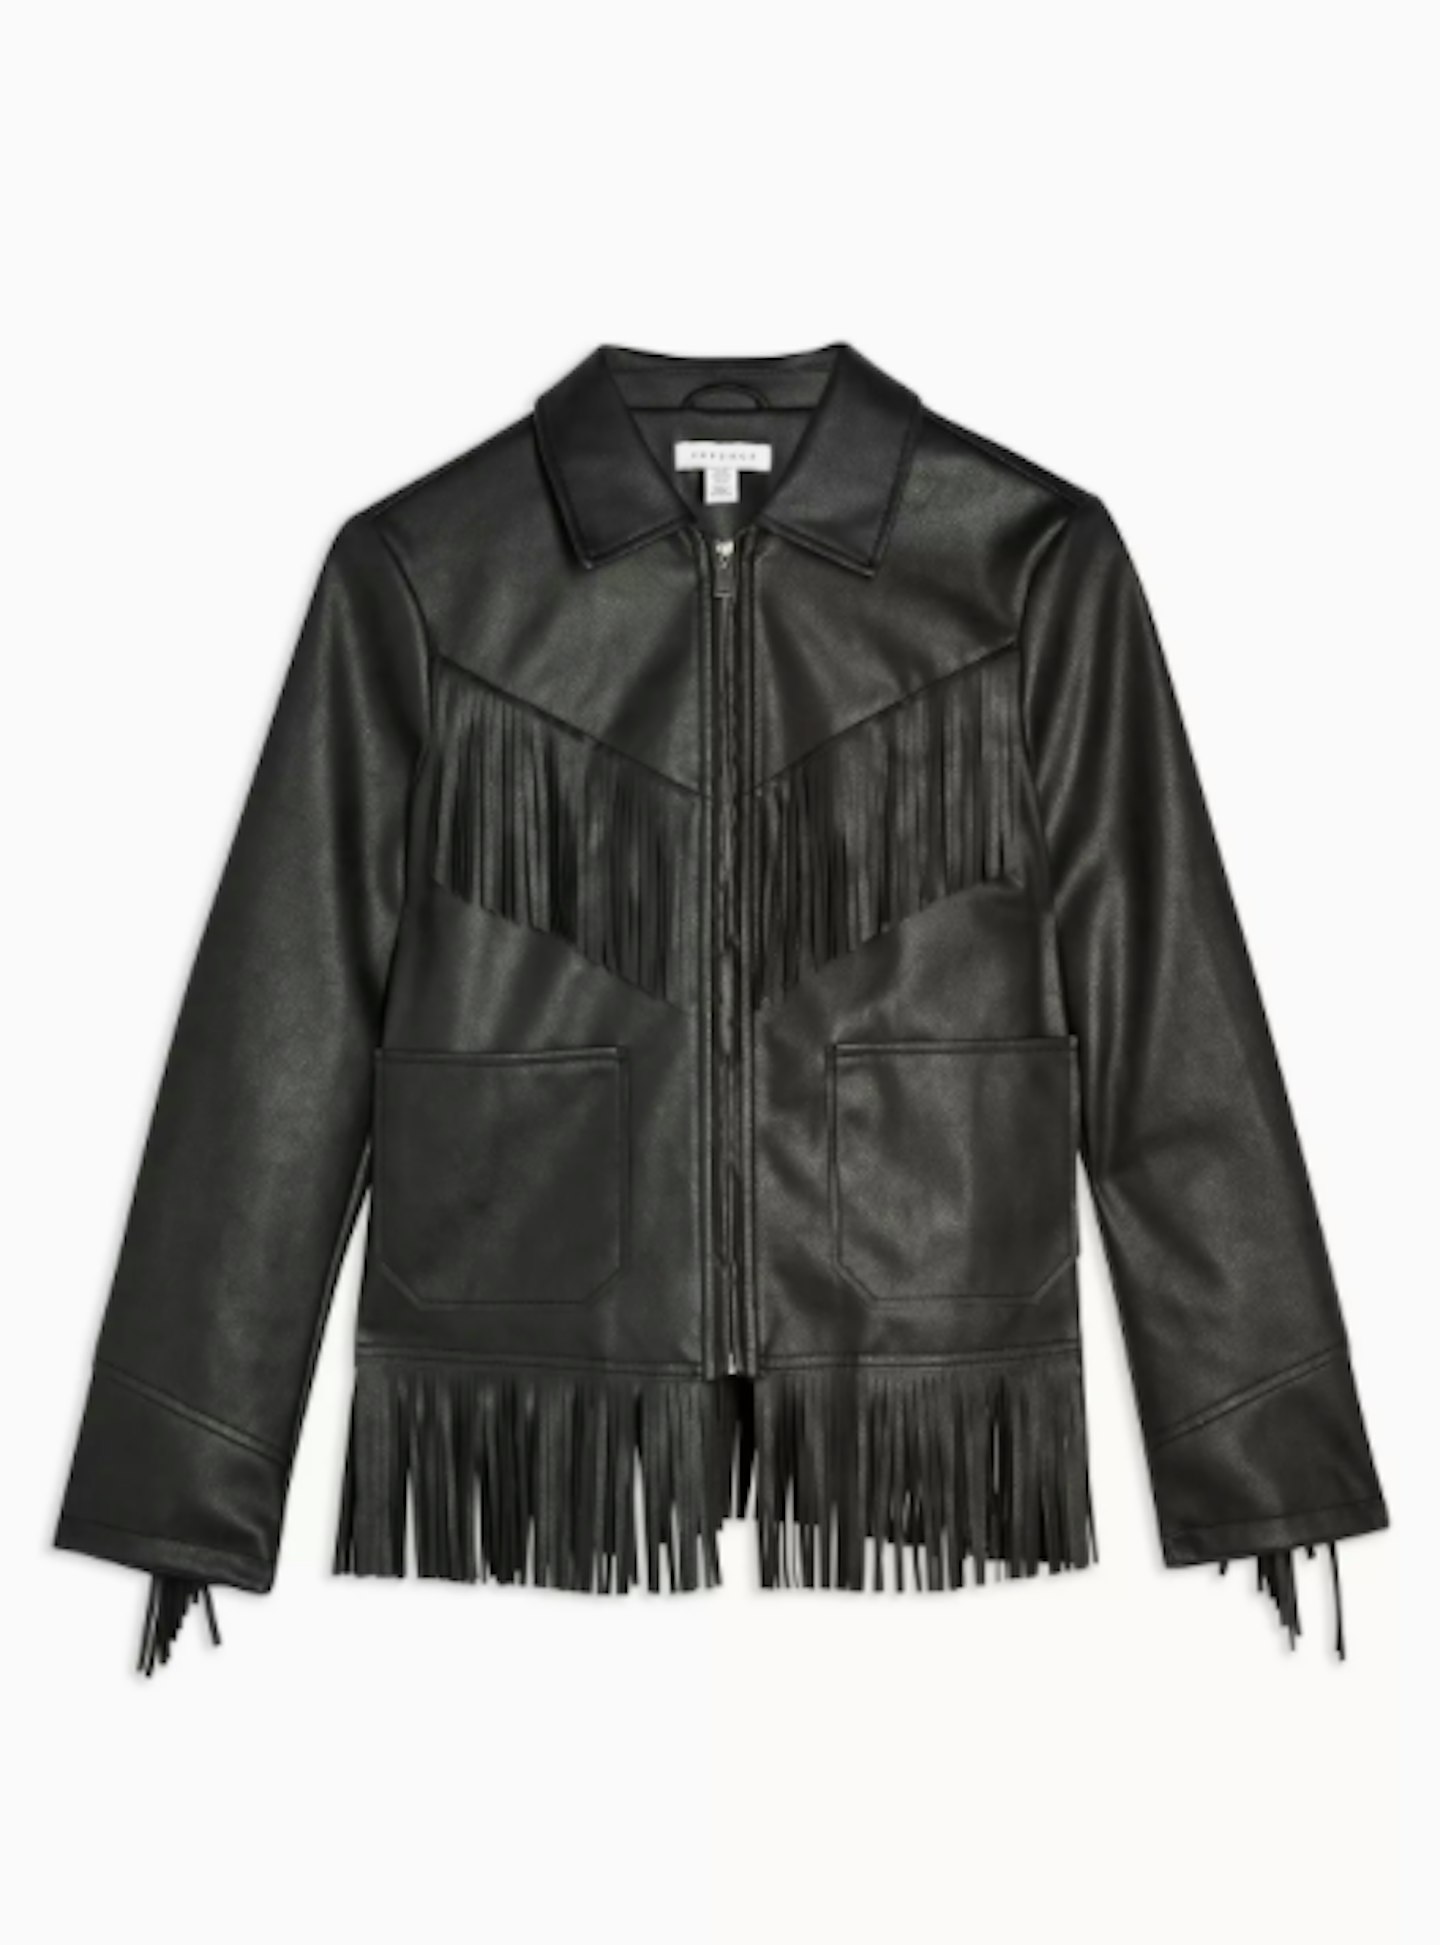 Topshop, Black Faux Leather Fringe Jacket, £42